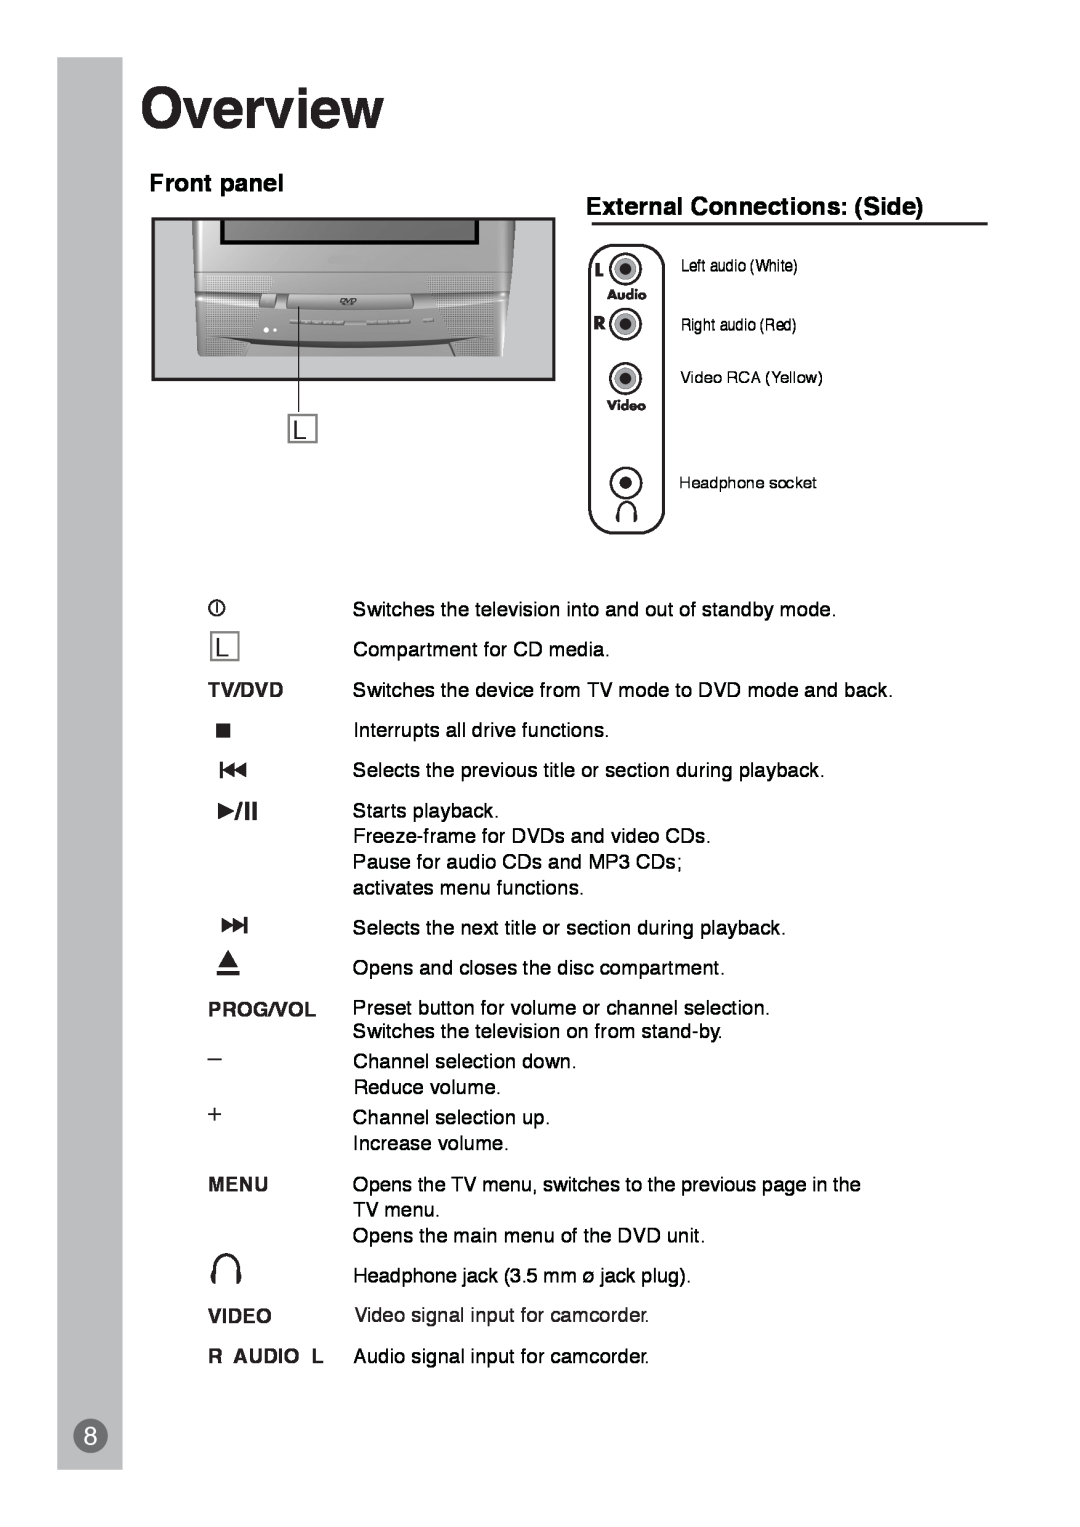 Beko E5 manual Overview, Front panel External Connections Side, Menu, Video, R Audio L 